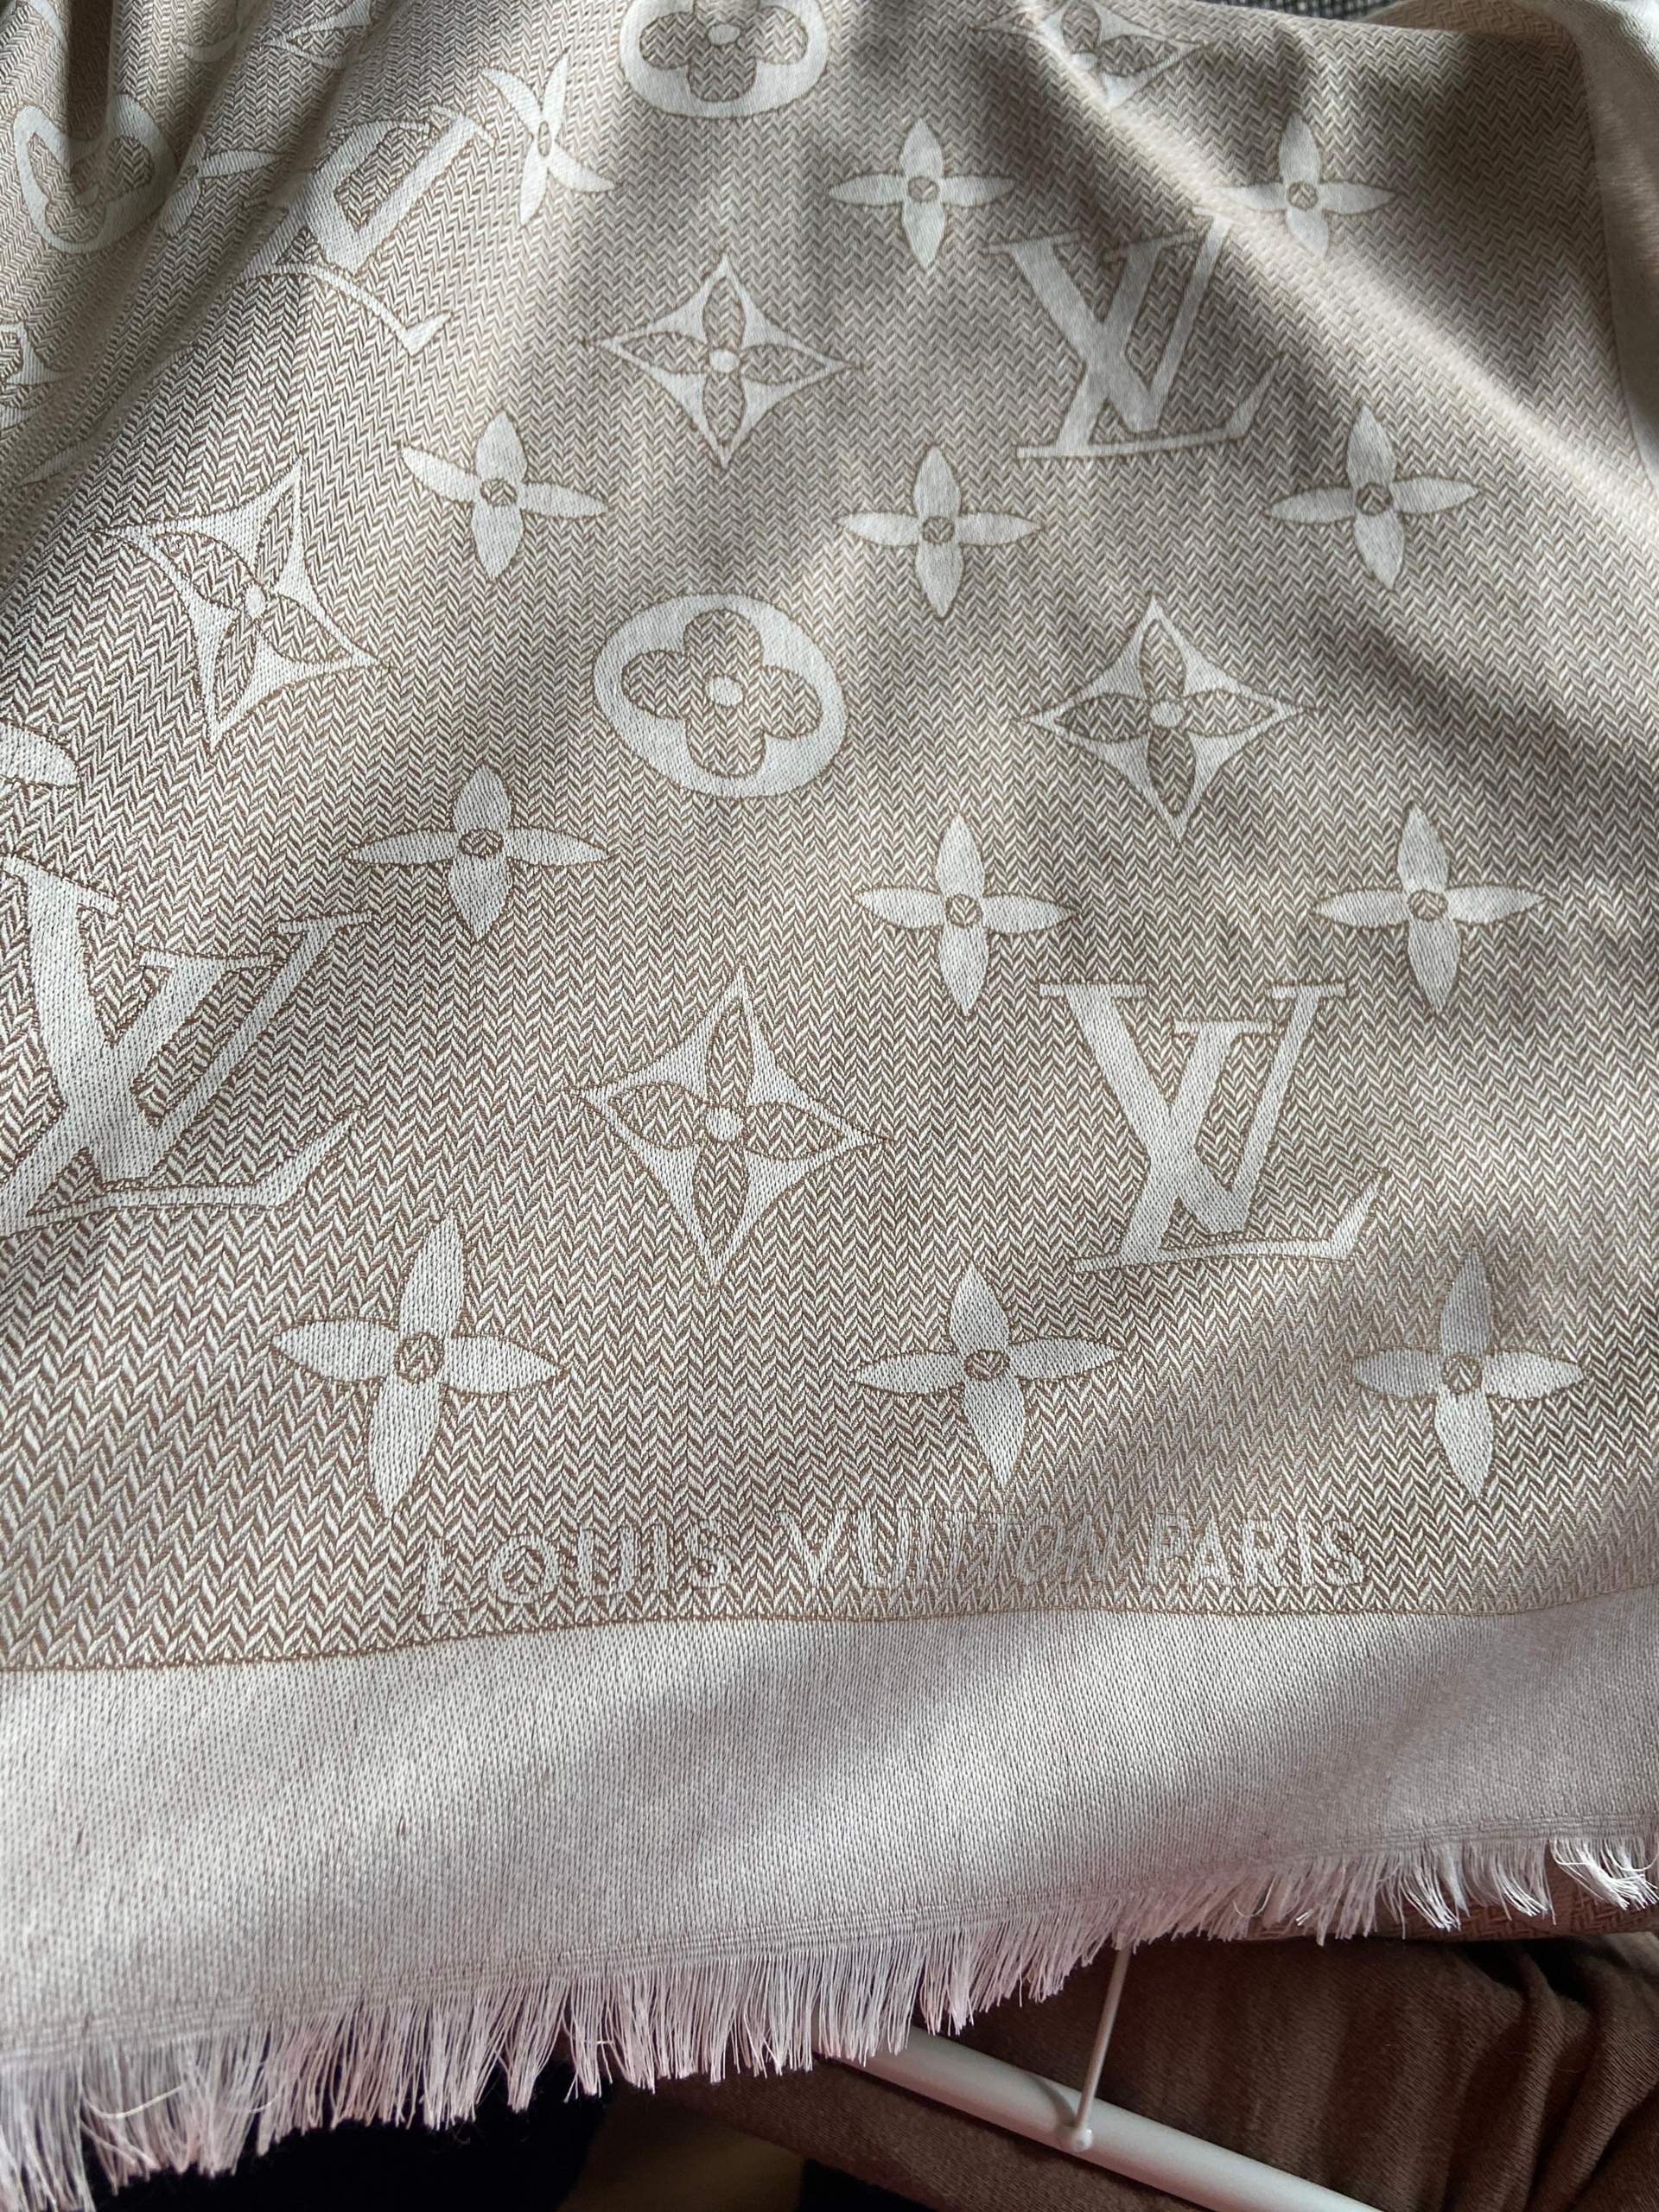 Louis Vuitton Schal Original